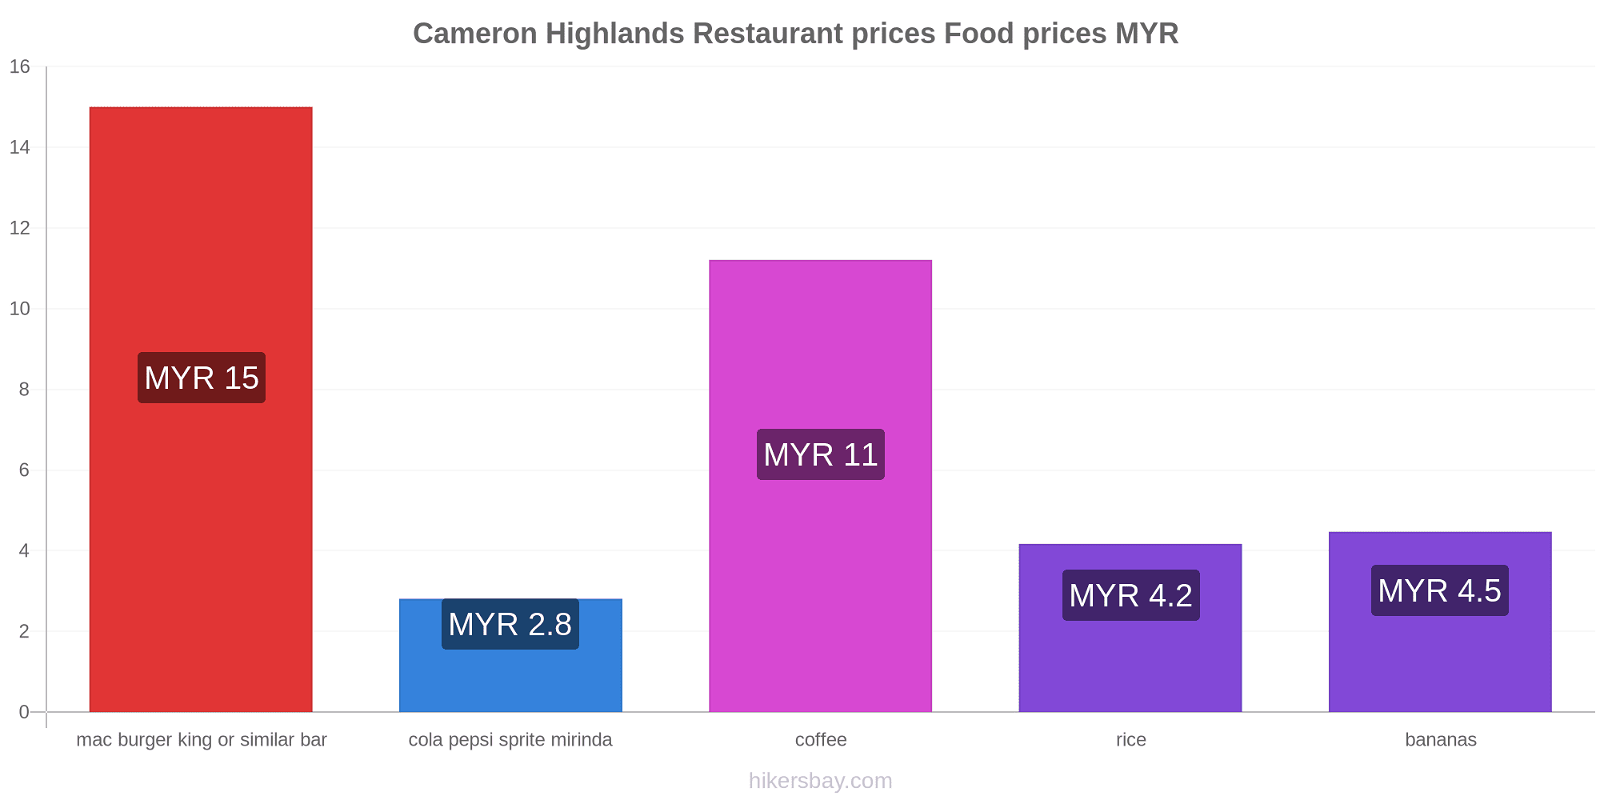 Cameron Highlands price changes hikersbay.com